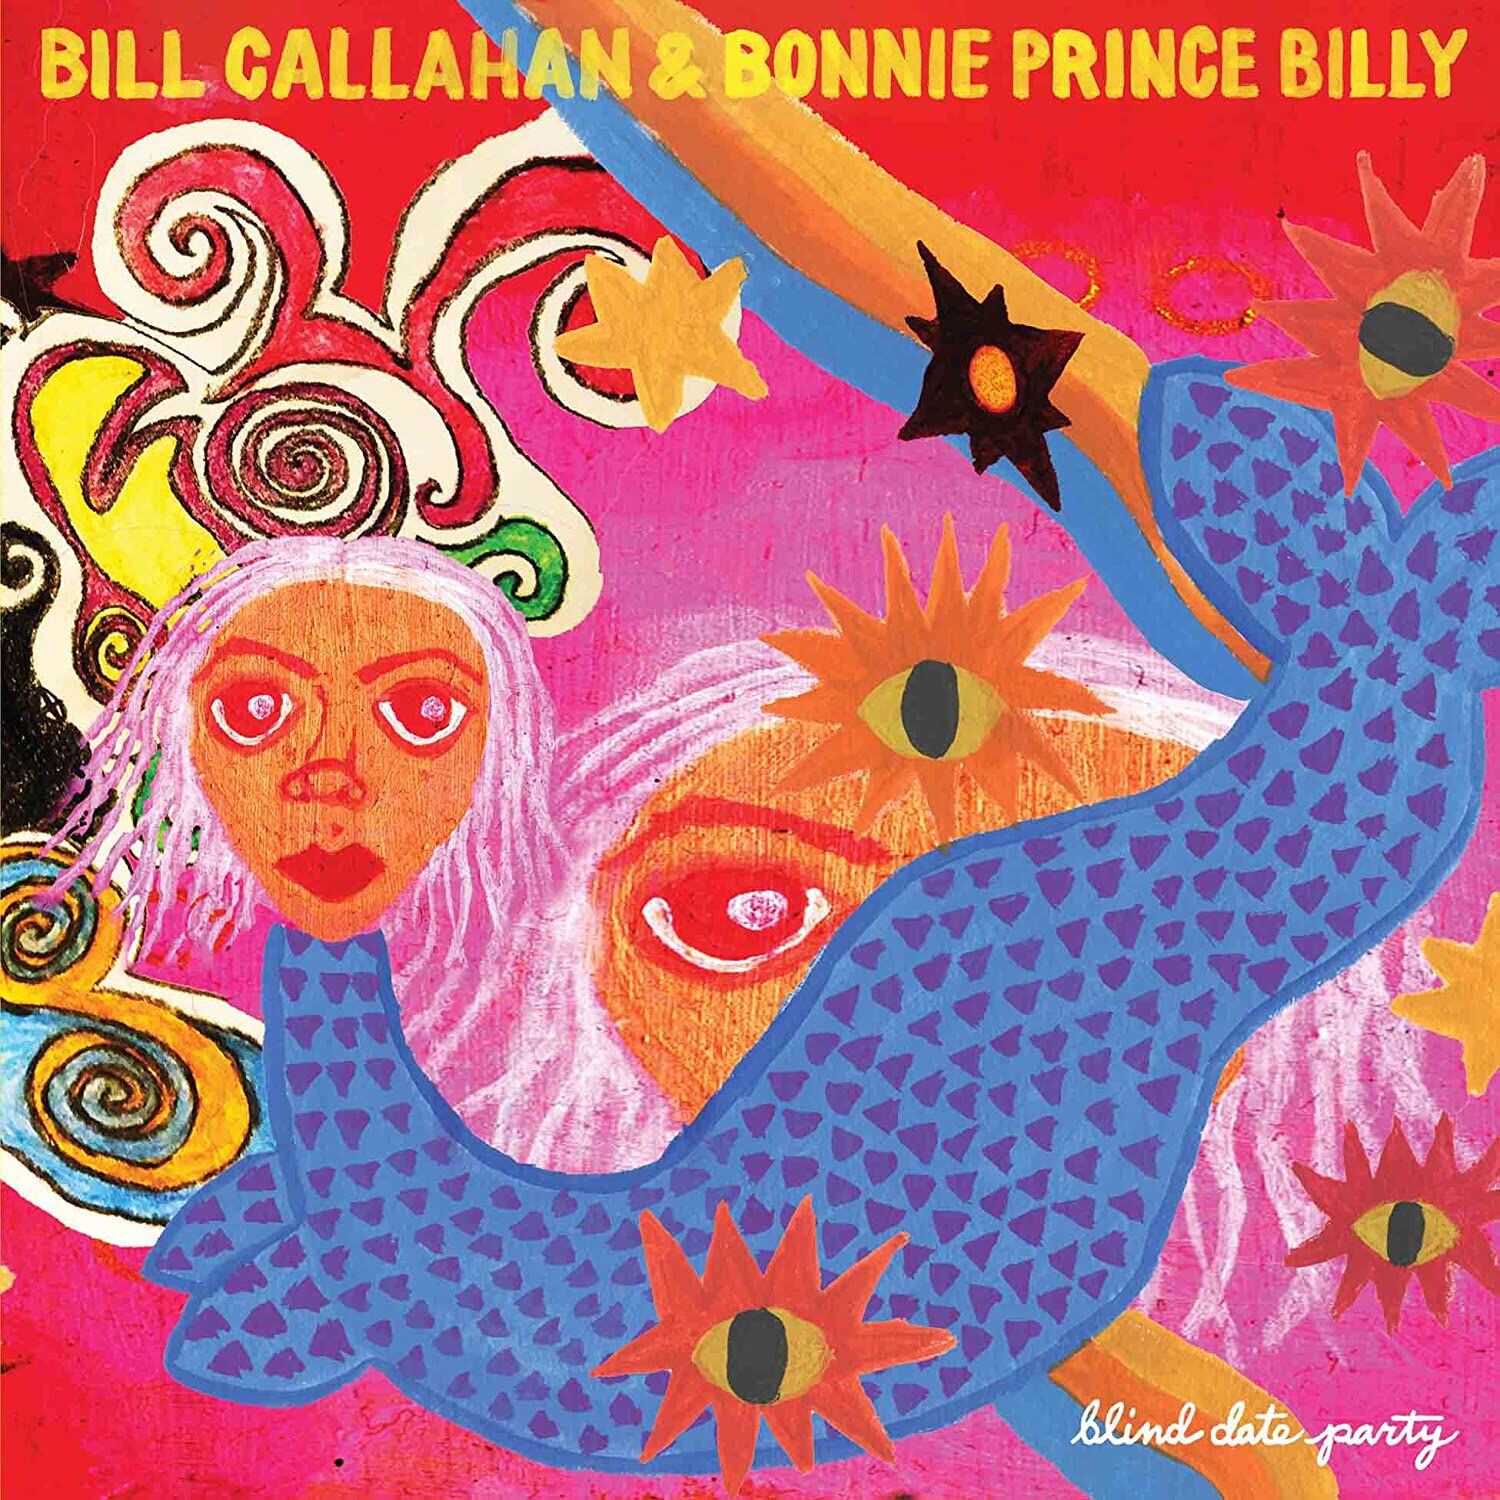 Portada del disco 'Blind Date Party', de Bill Callahan & Bonnie 'Prince' Billy.